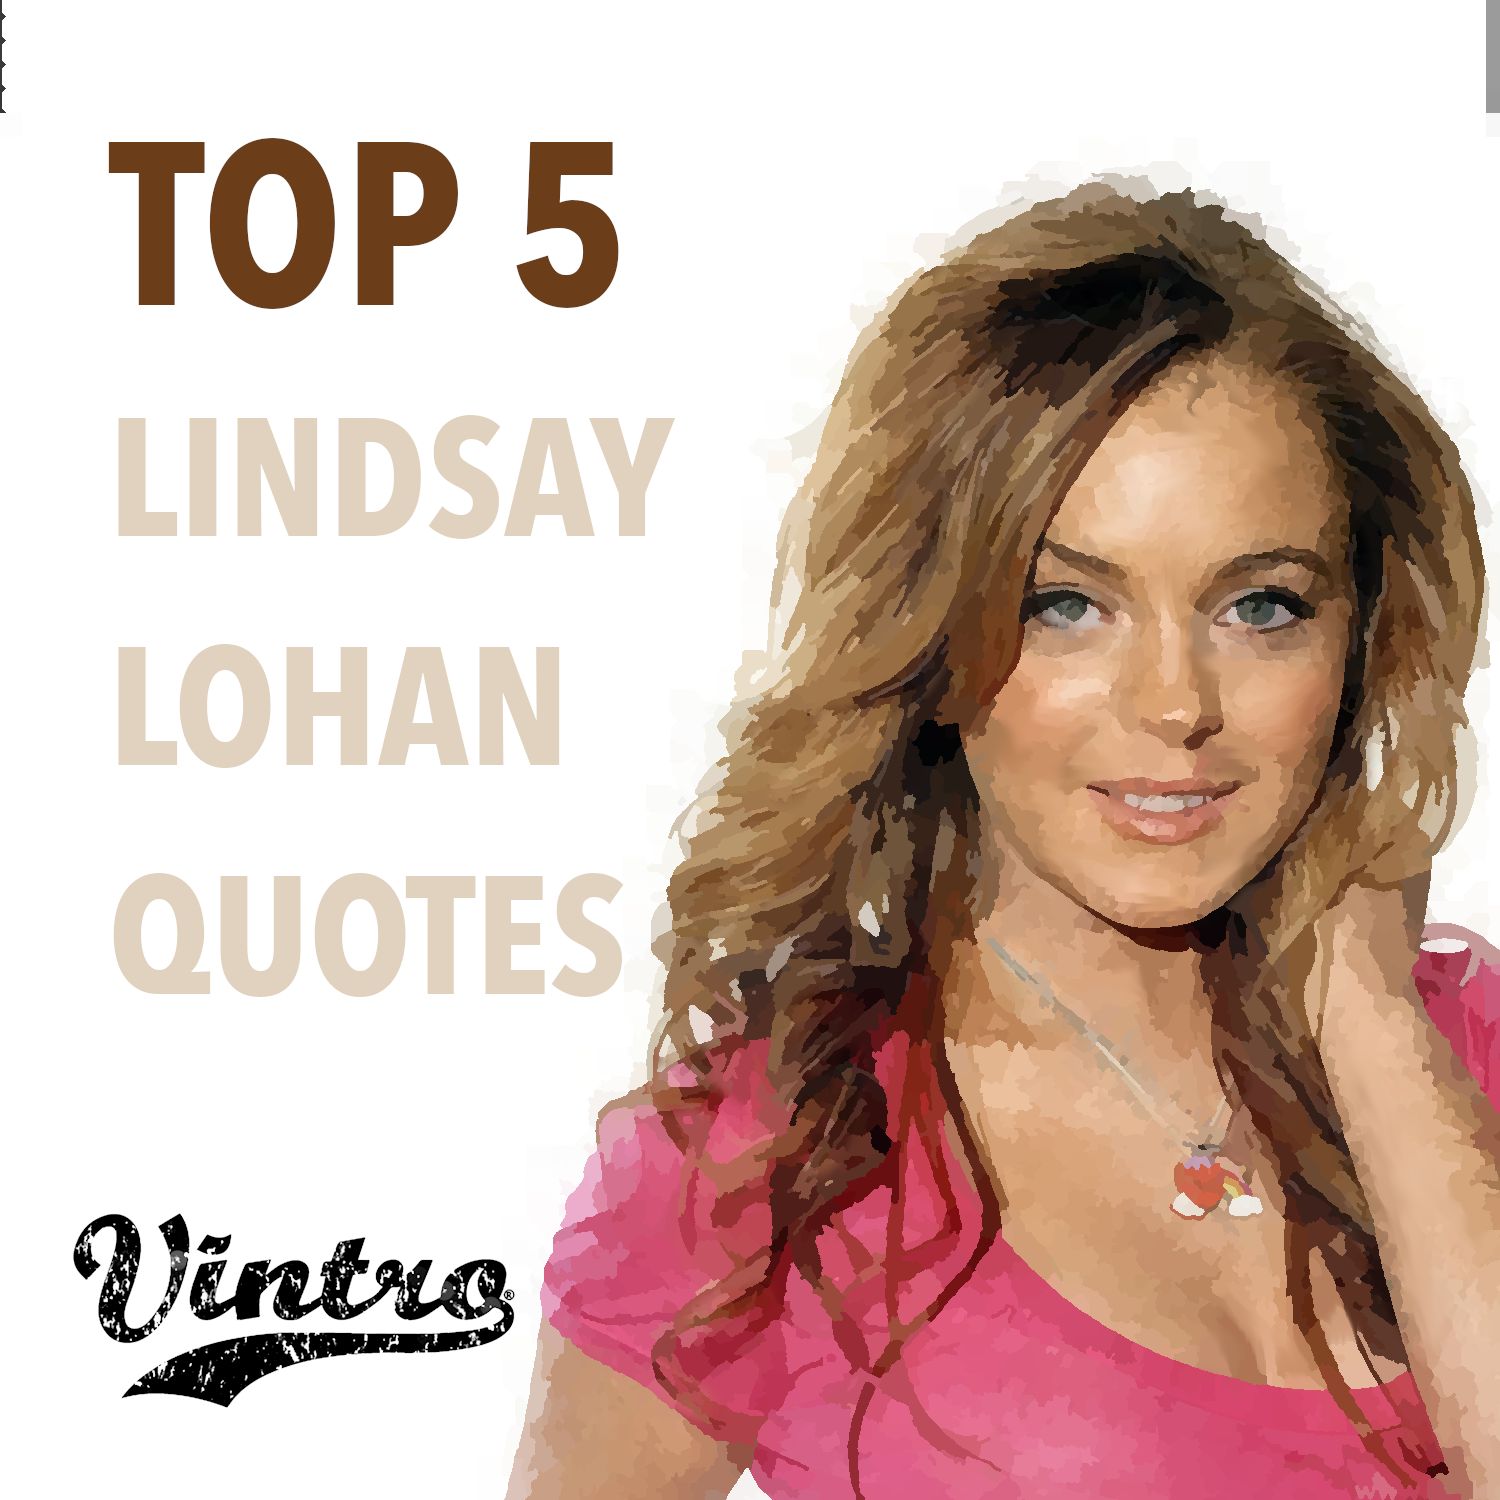 Top 5 Lindsay Lohan Quotes